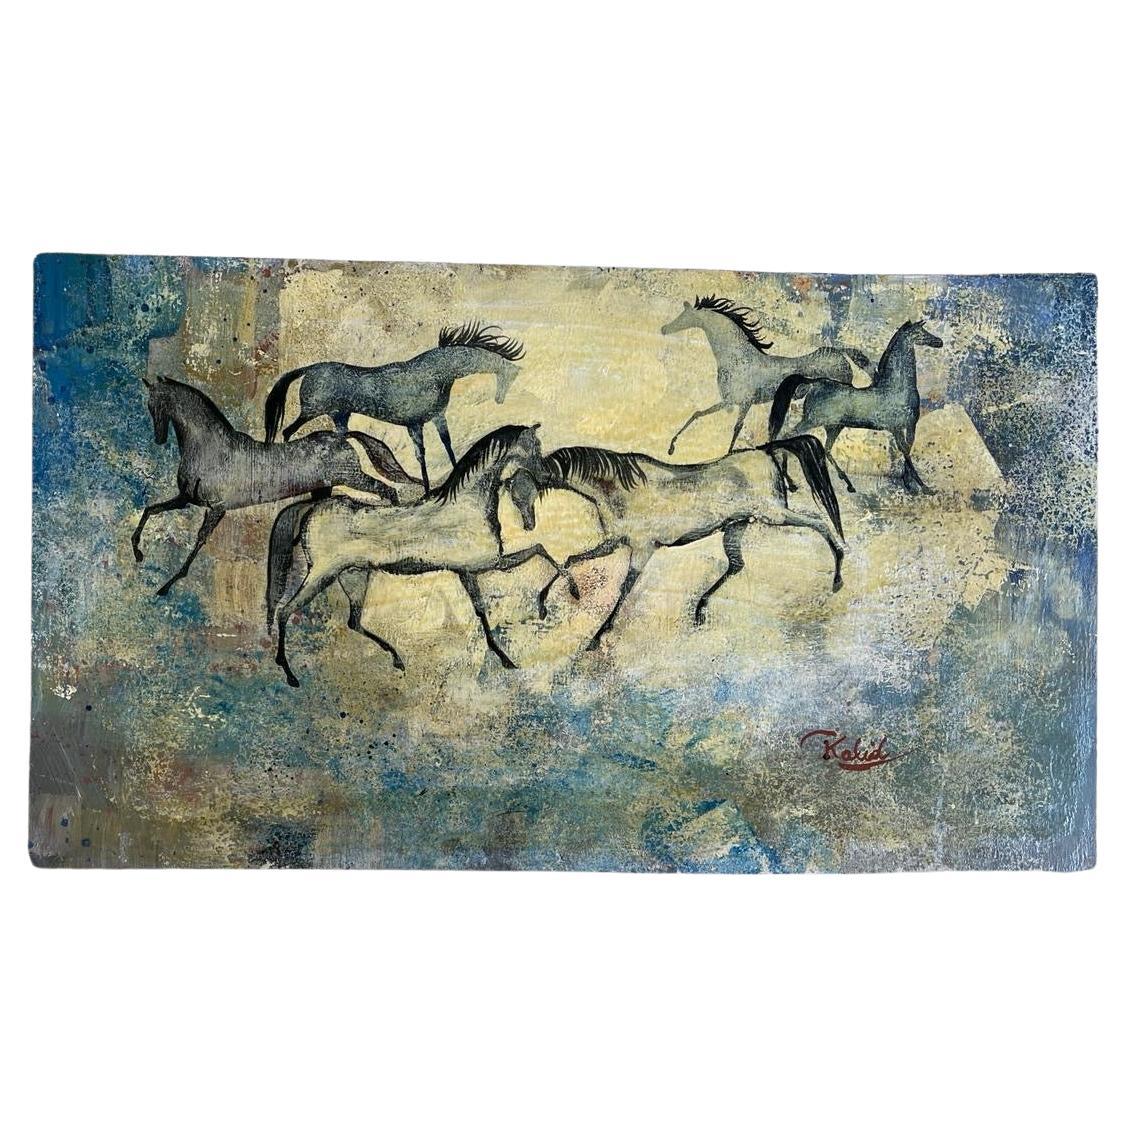 Khaled Al Rahal painting with horses